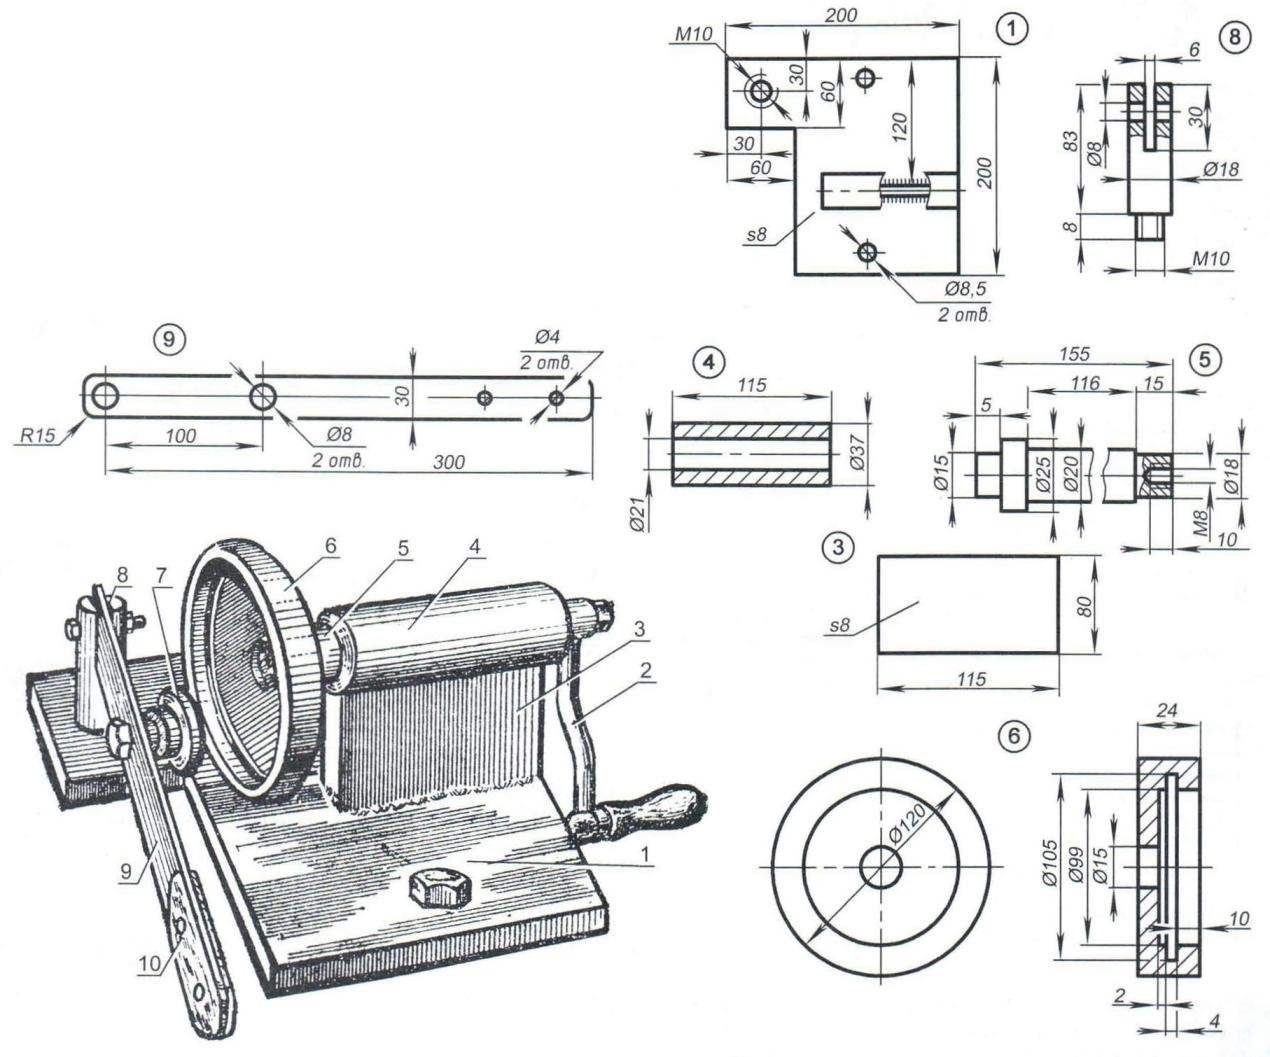 Fig. 1. Machine-rectifier